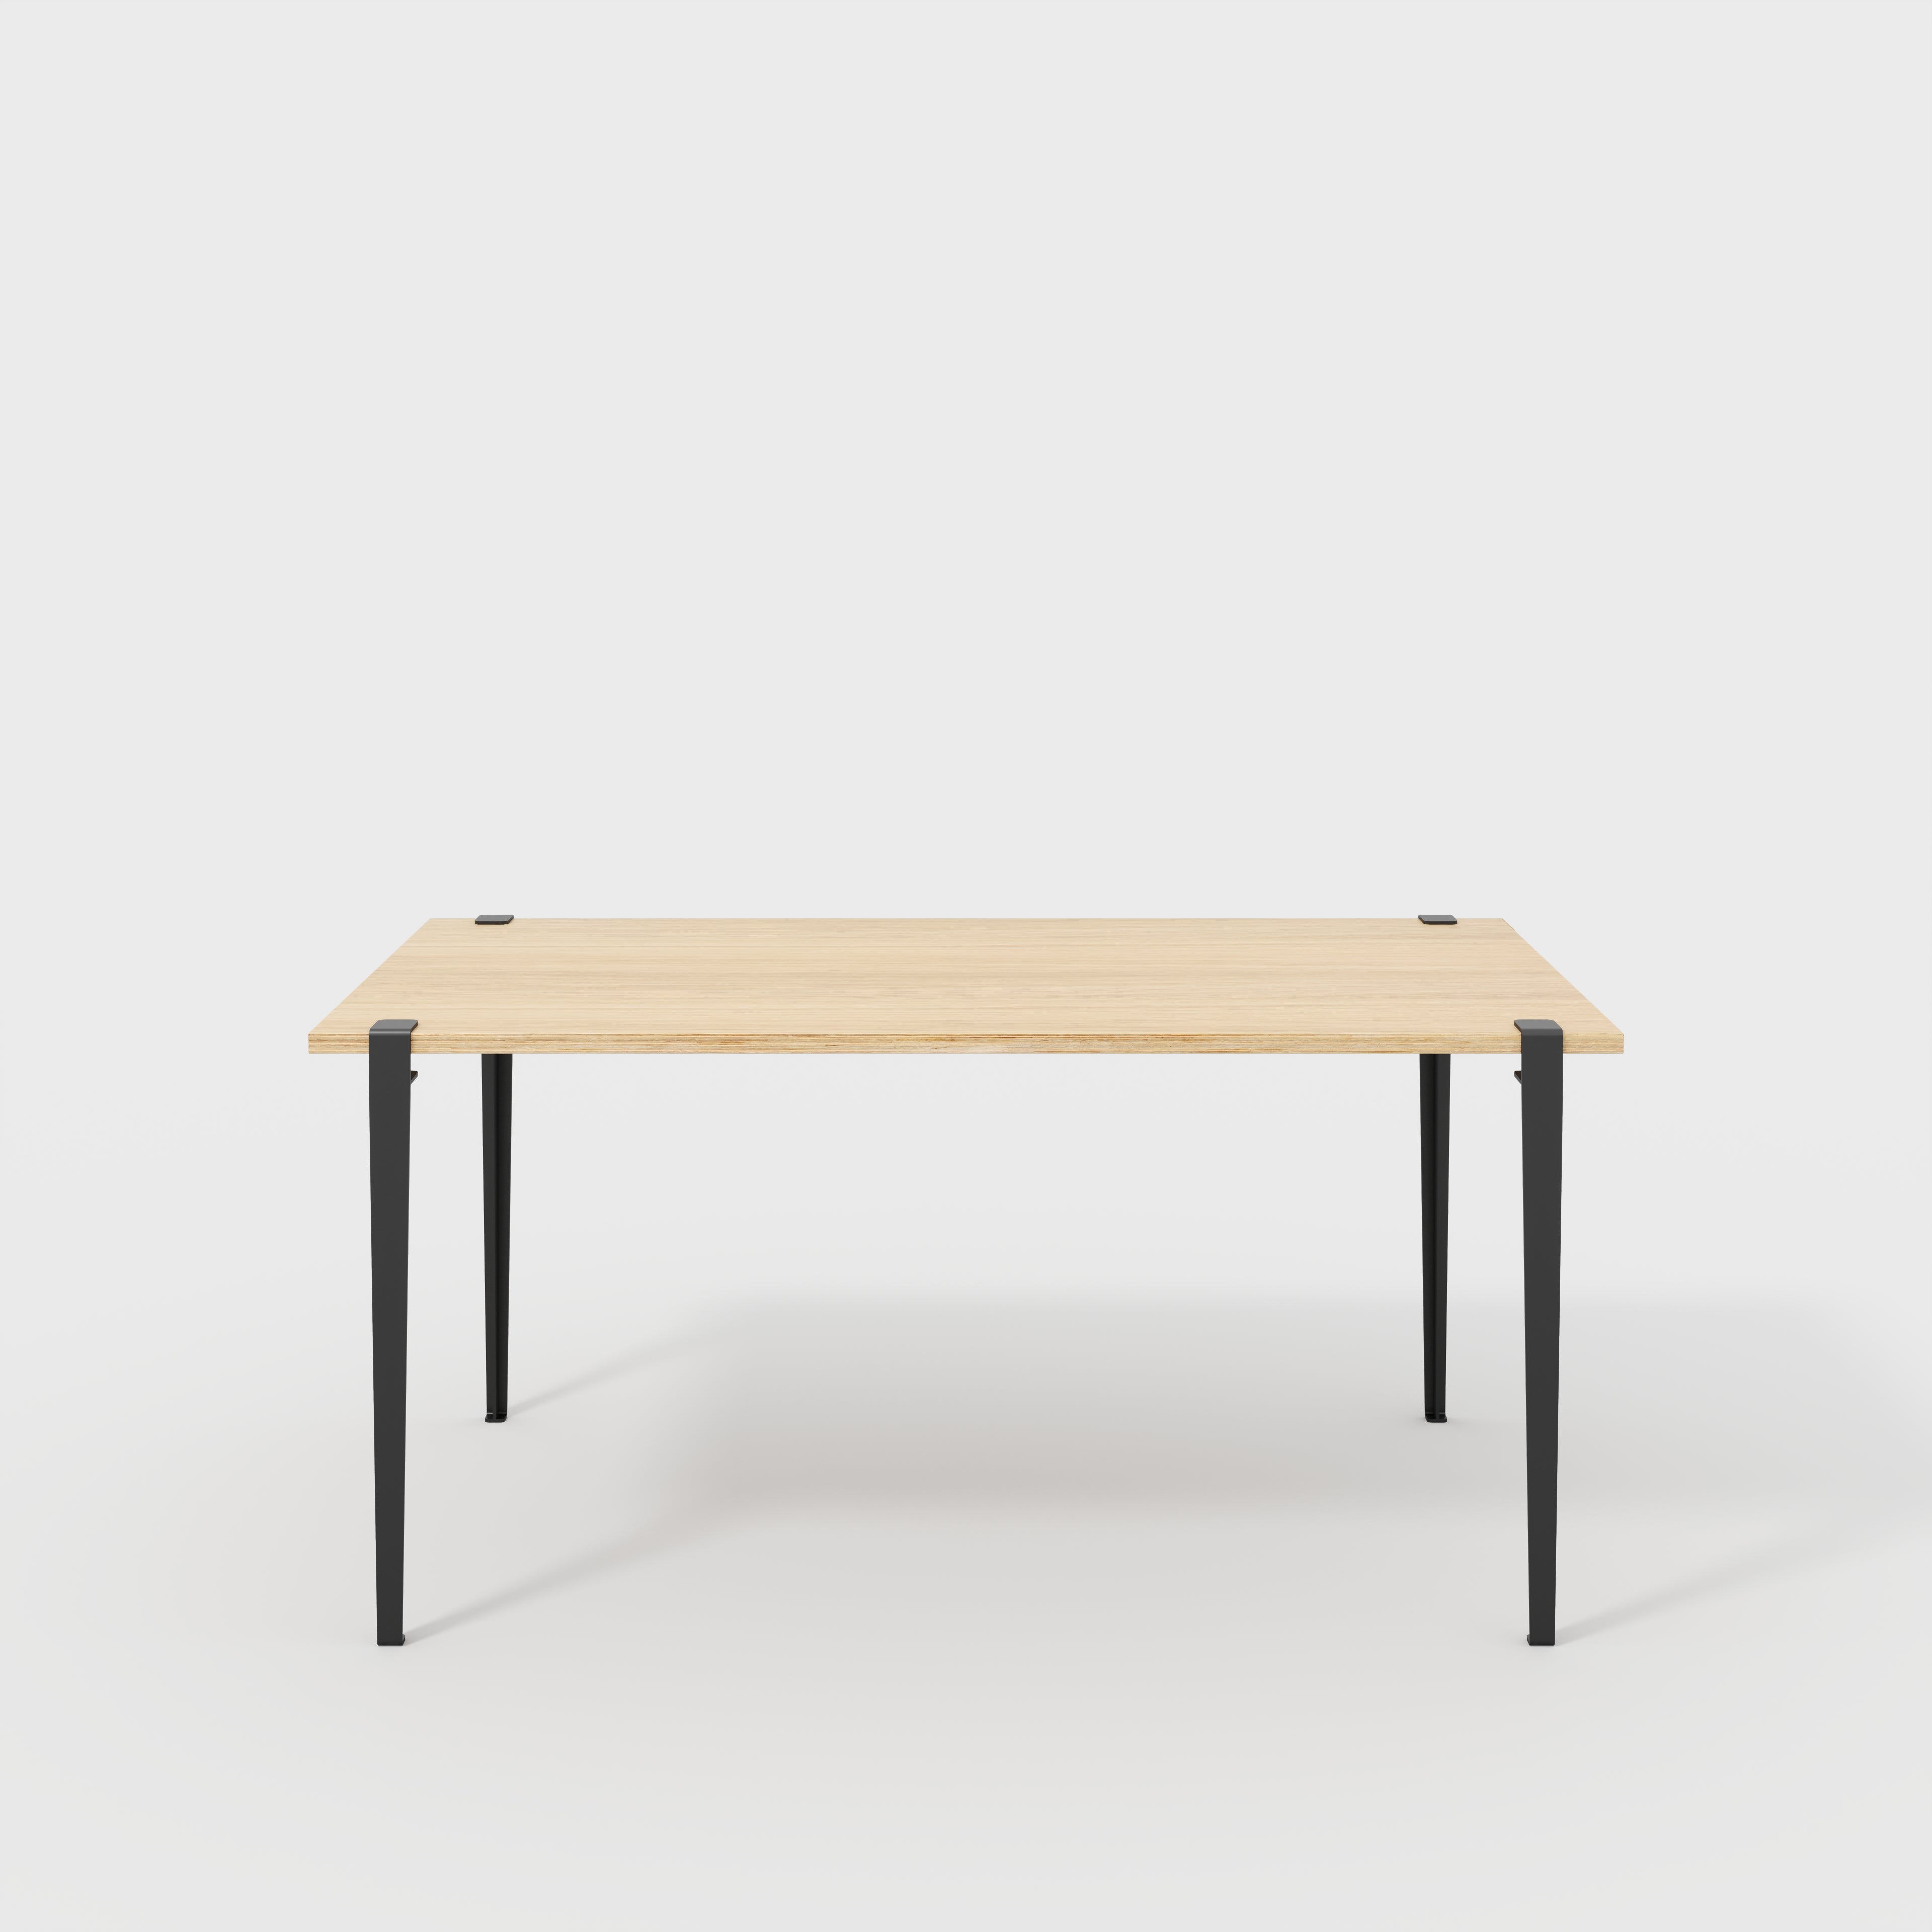 Desk with Black Tiptoe Legs - Plywood - Oak - 1600(w) x 800(d) x 750(h)